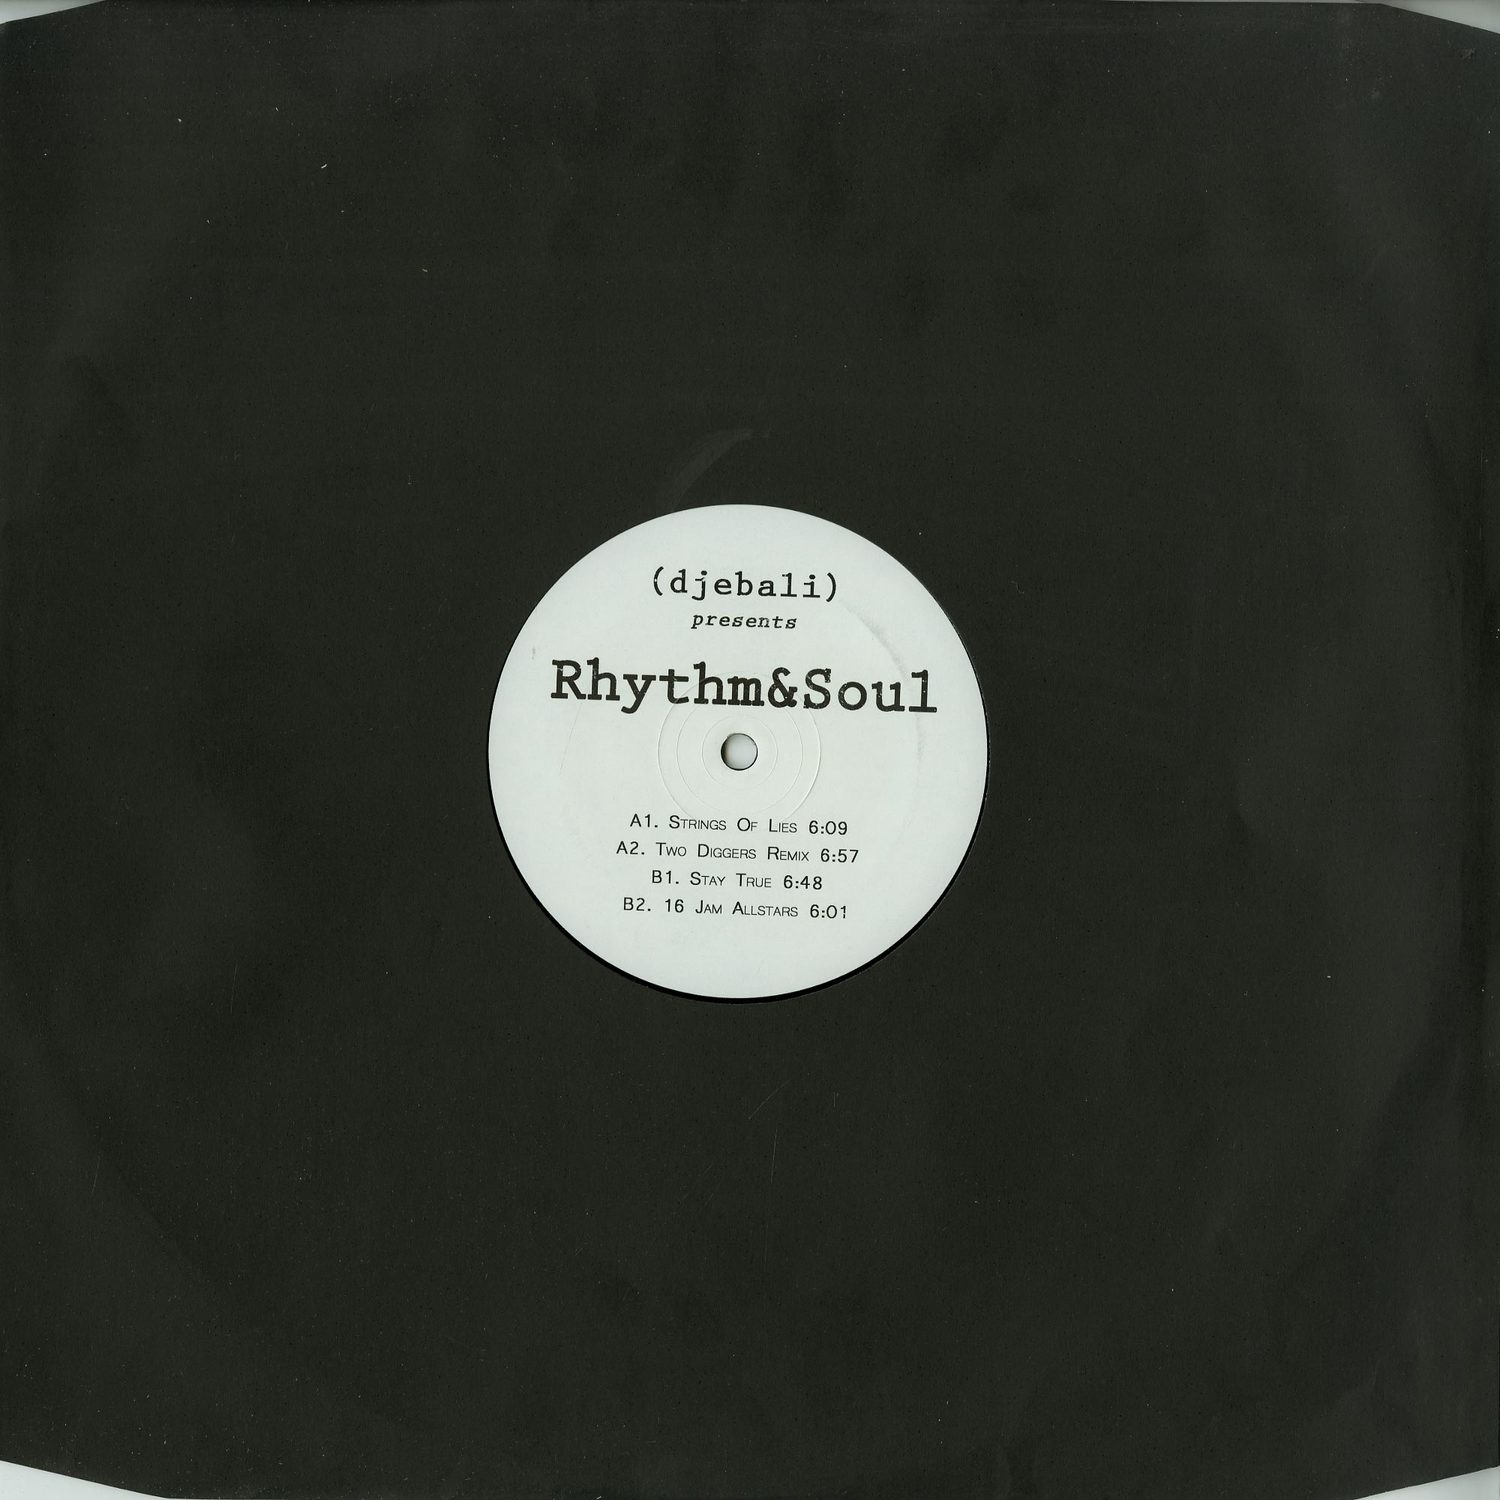 Djebali pres Rhythm & Soul - EP 